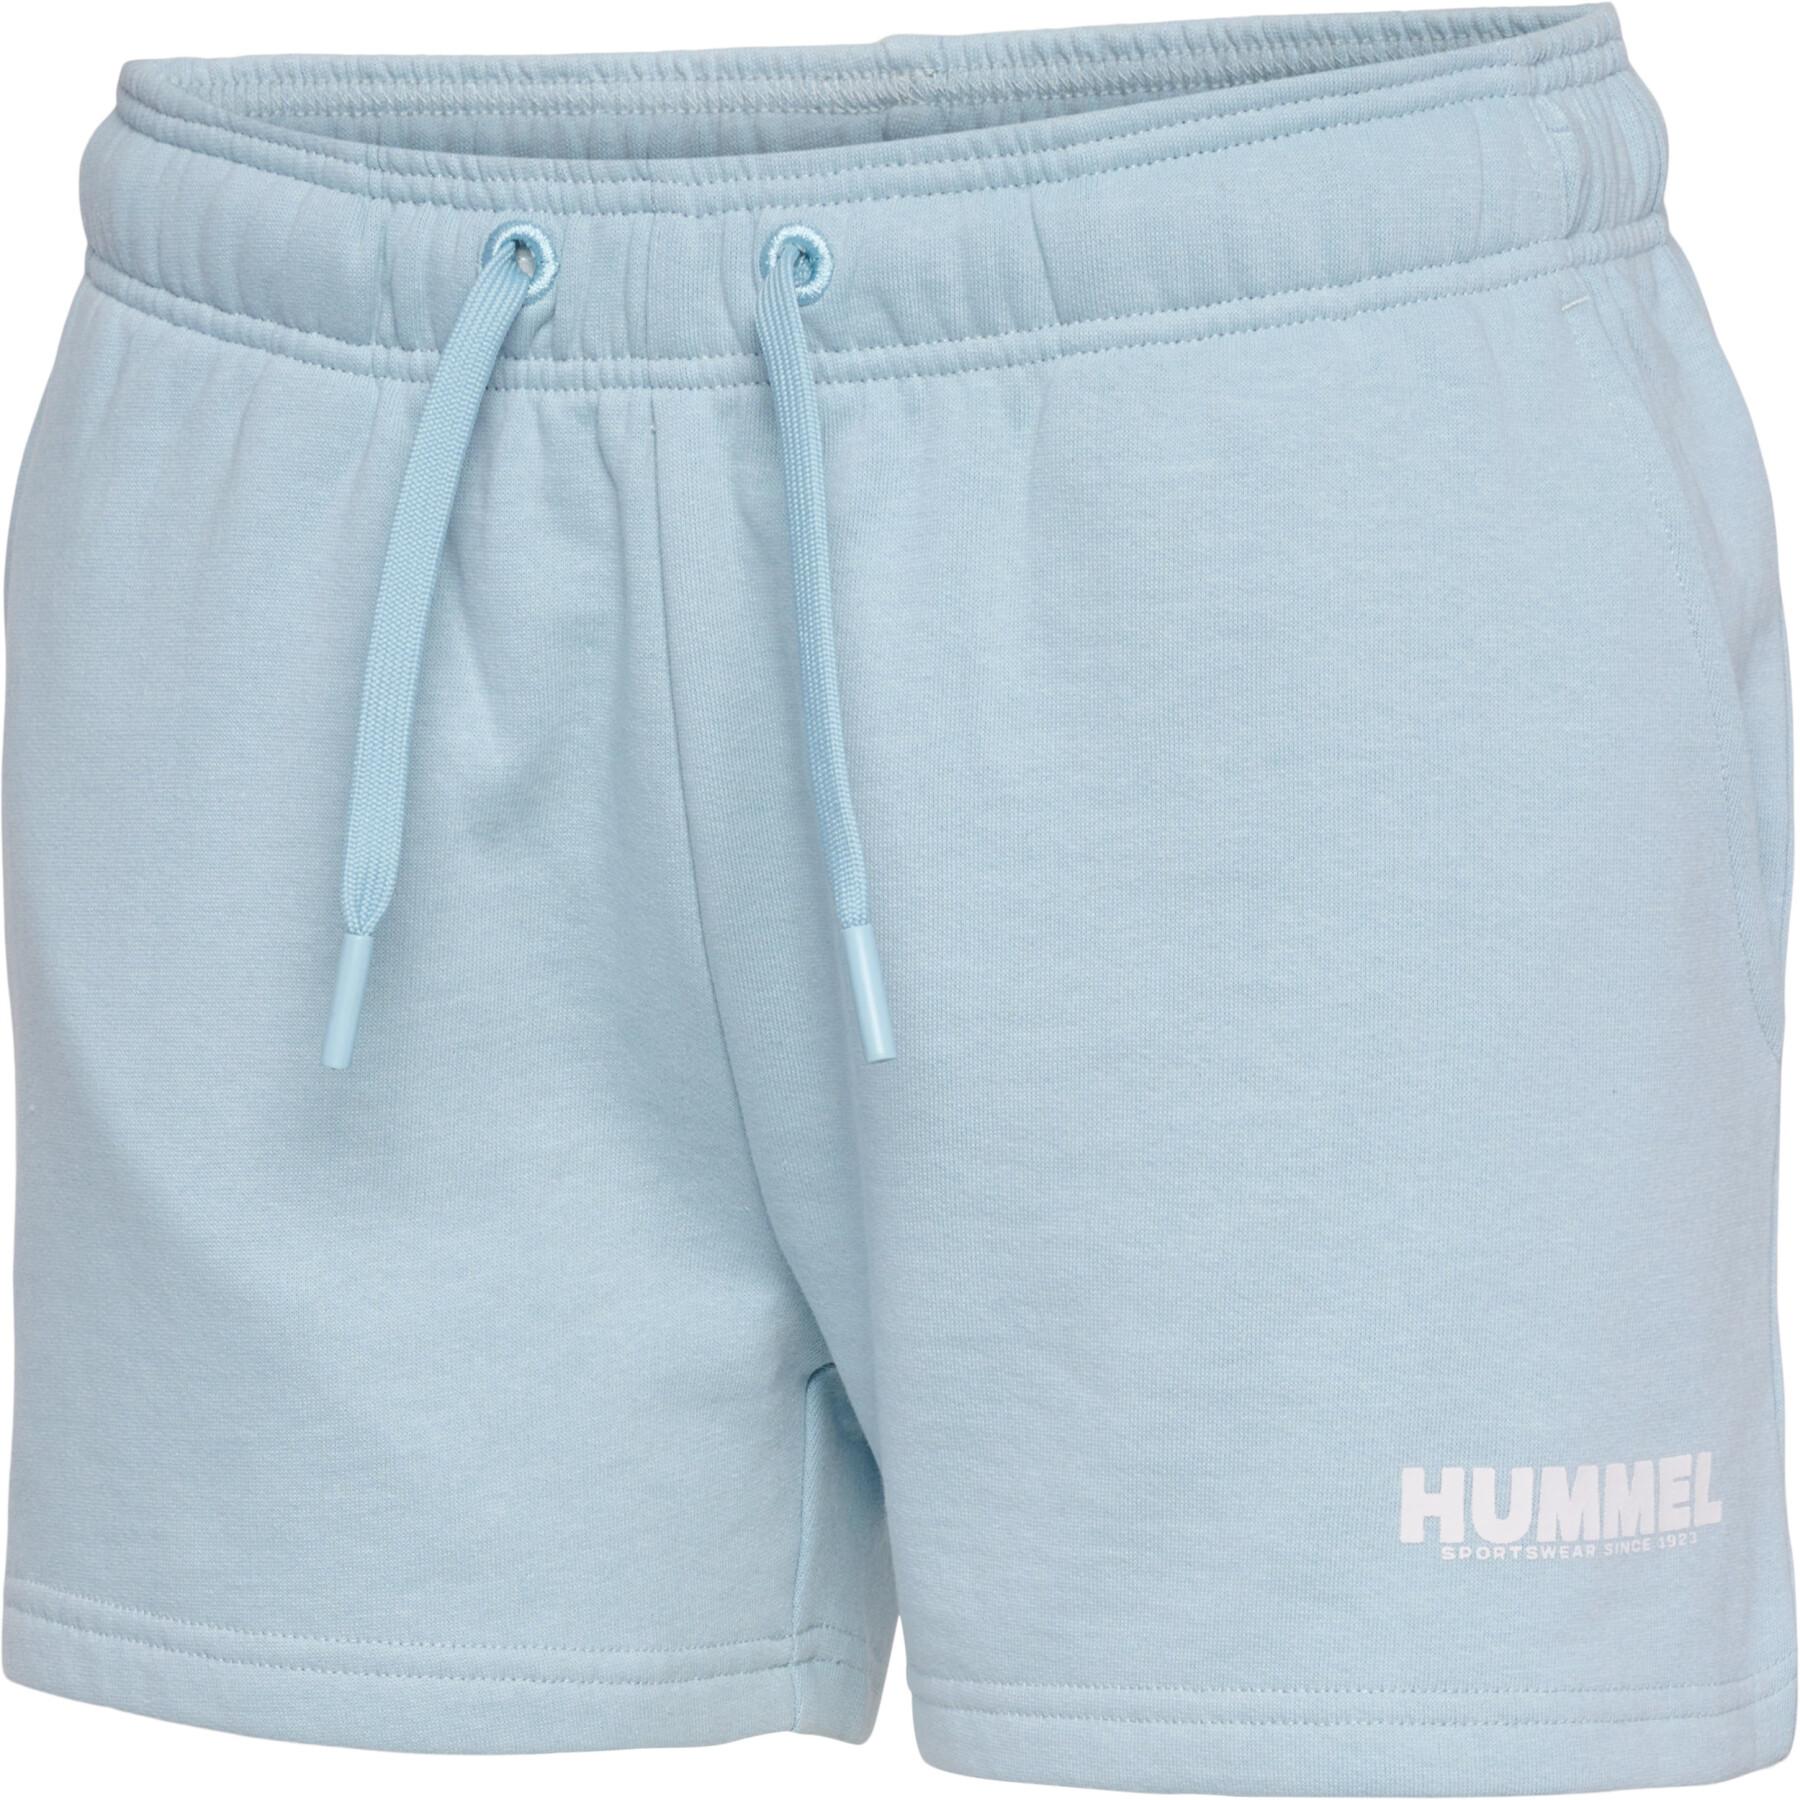 Women's shorts Hummel Legacy